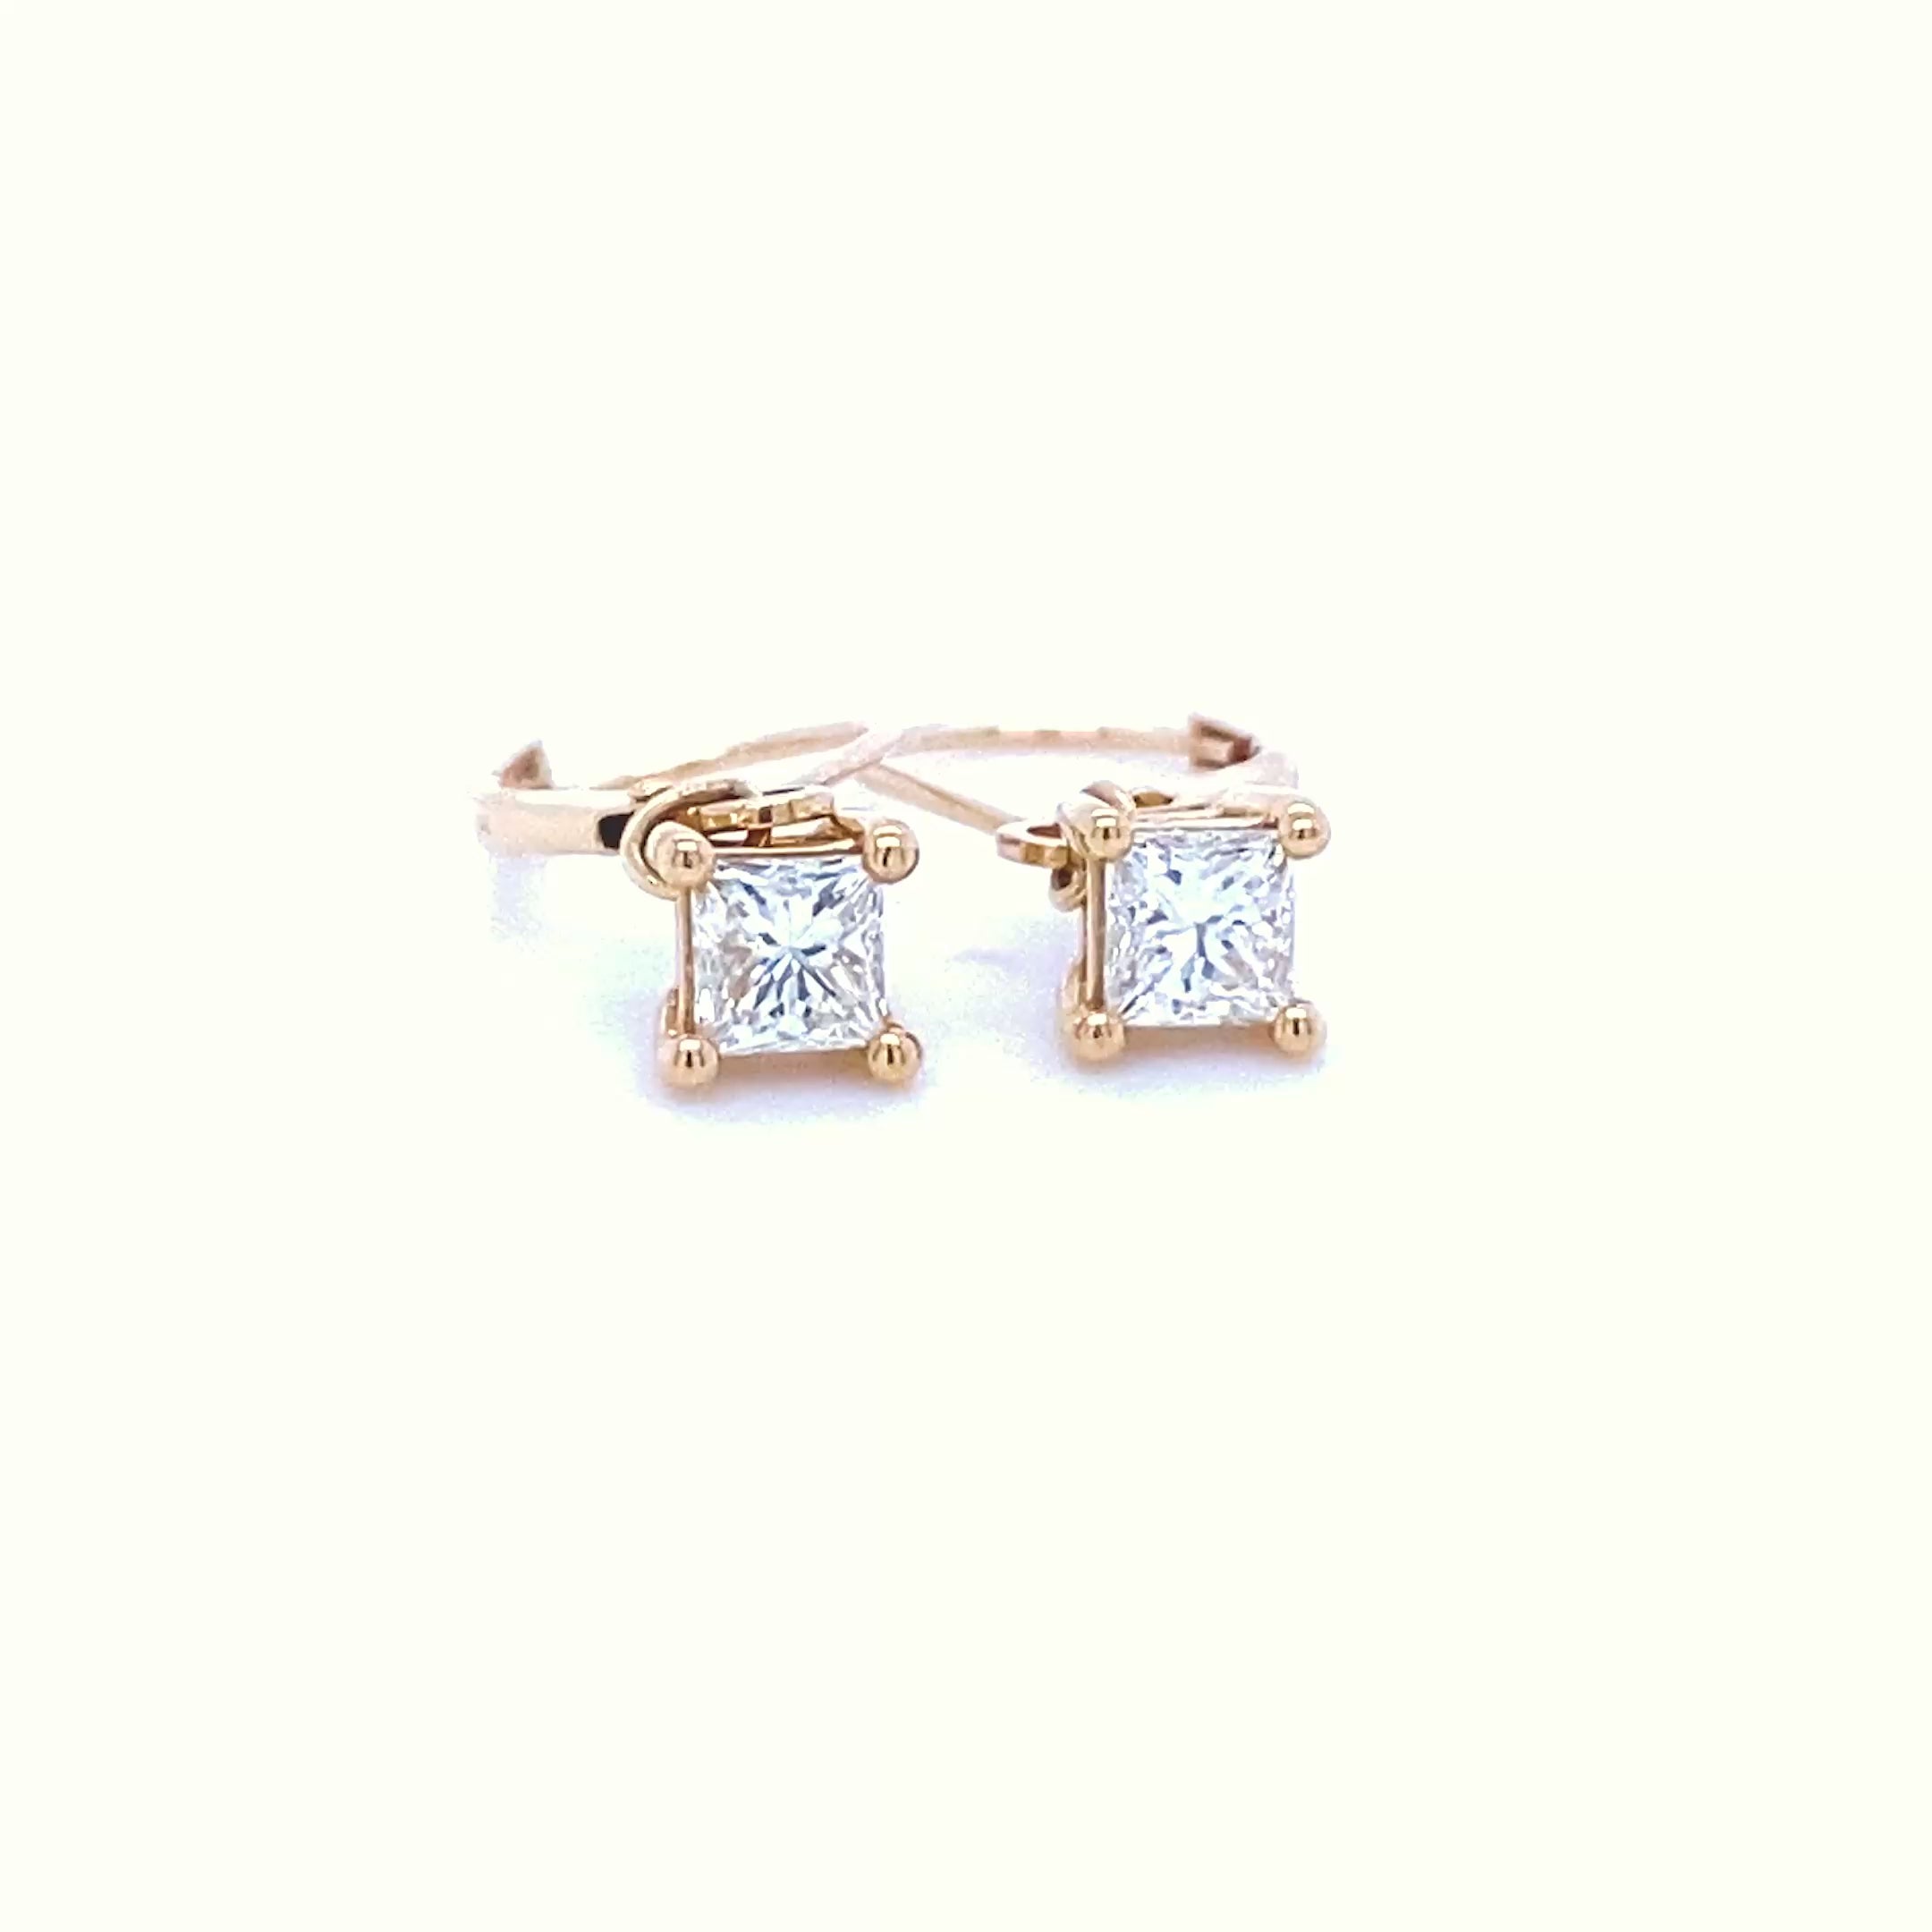 Beautiful  0.80 CT Princess Cut Diamond Stud Earrings in 14KT Yellow Gold - Stud Earrings